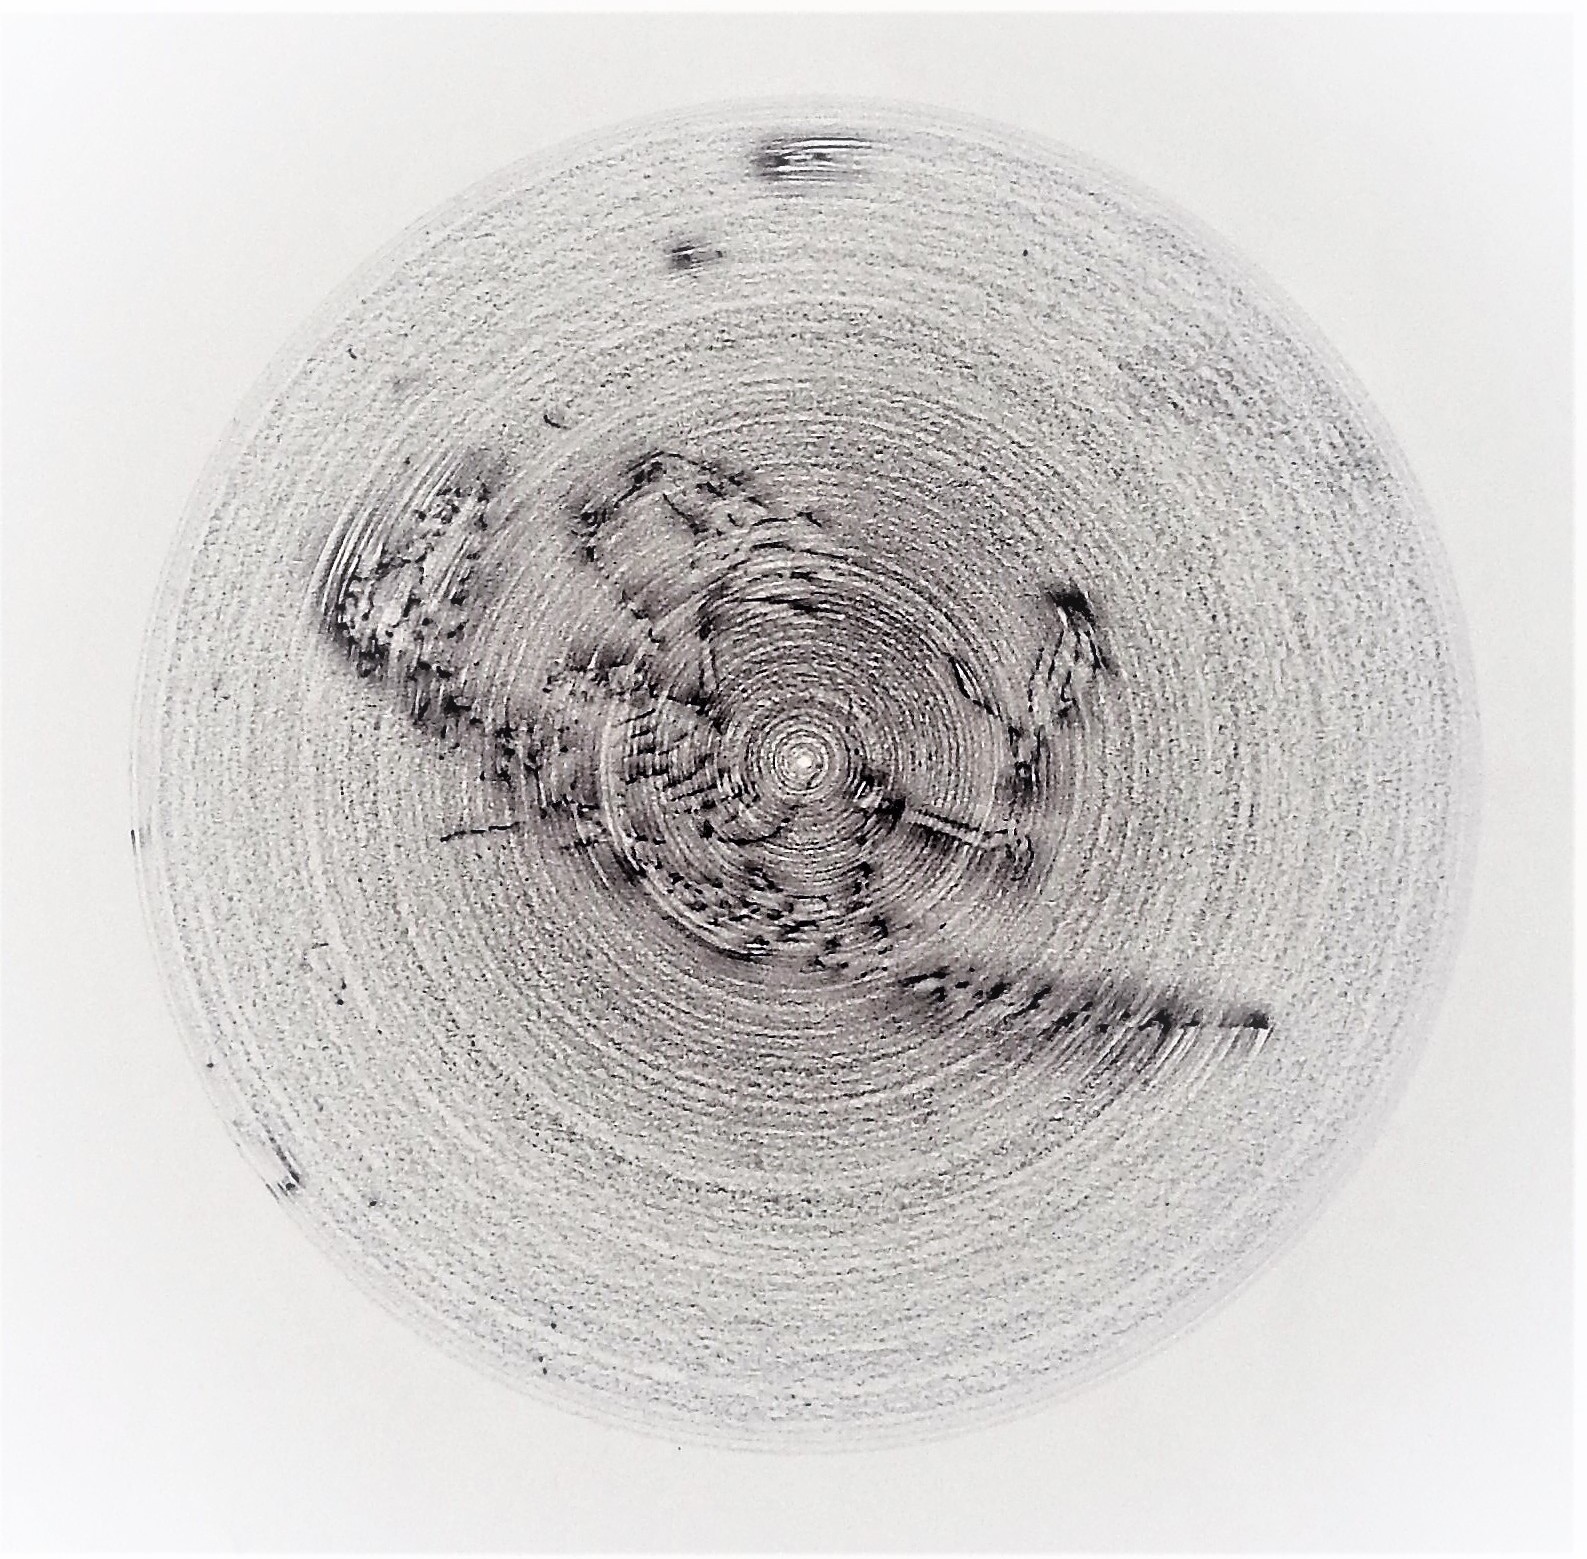 1.	Inbar Frim, Untitled, pencil on paper, 60x 60 cm, 2018